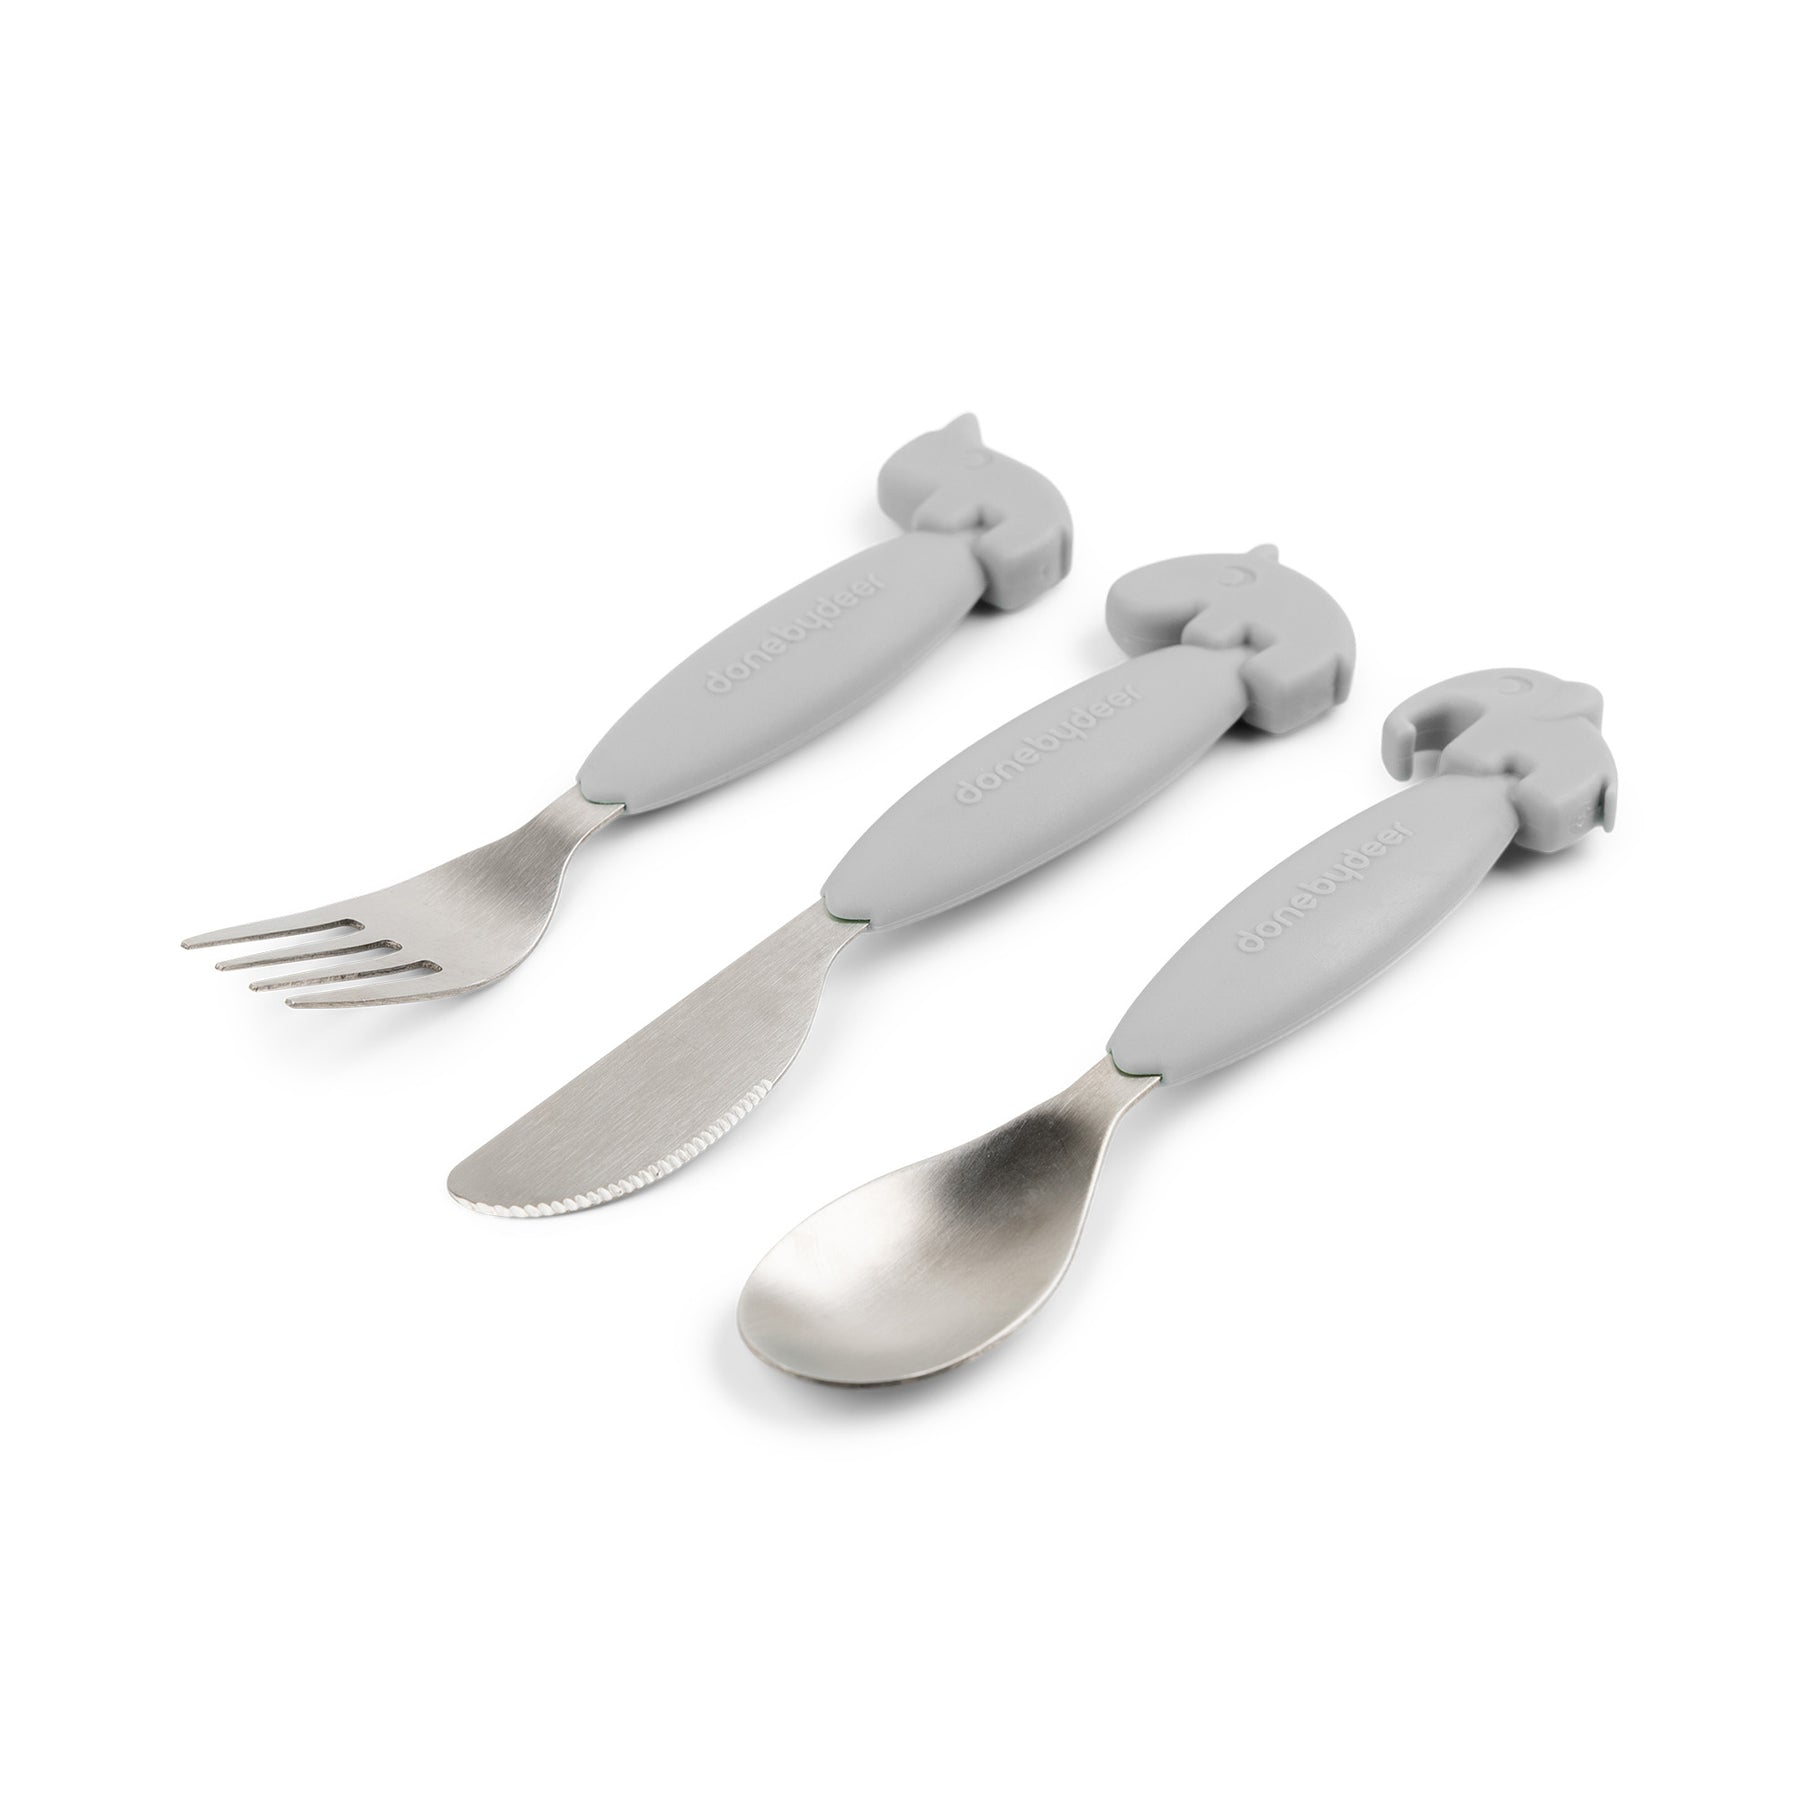 Easy-grip cutlery set - Deer friends - Grey - Front